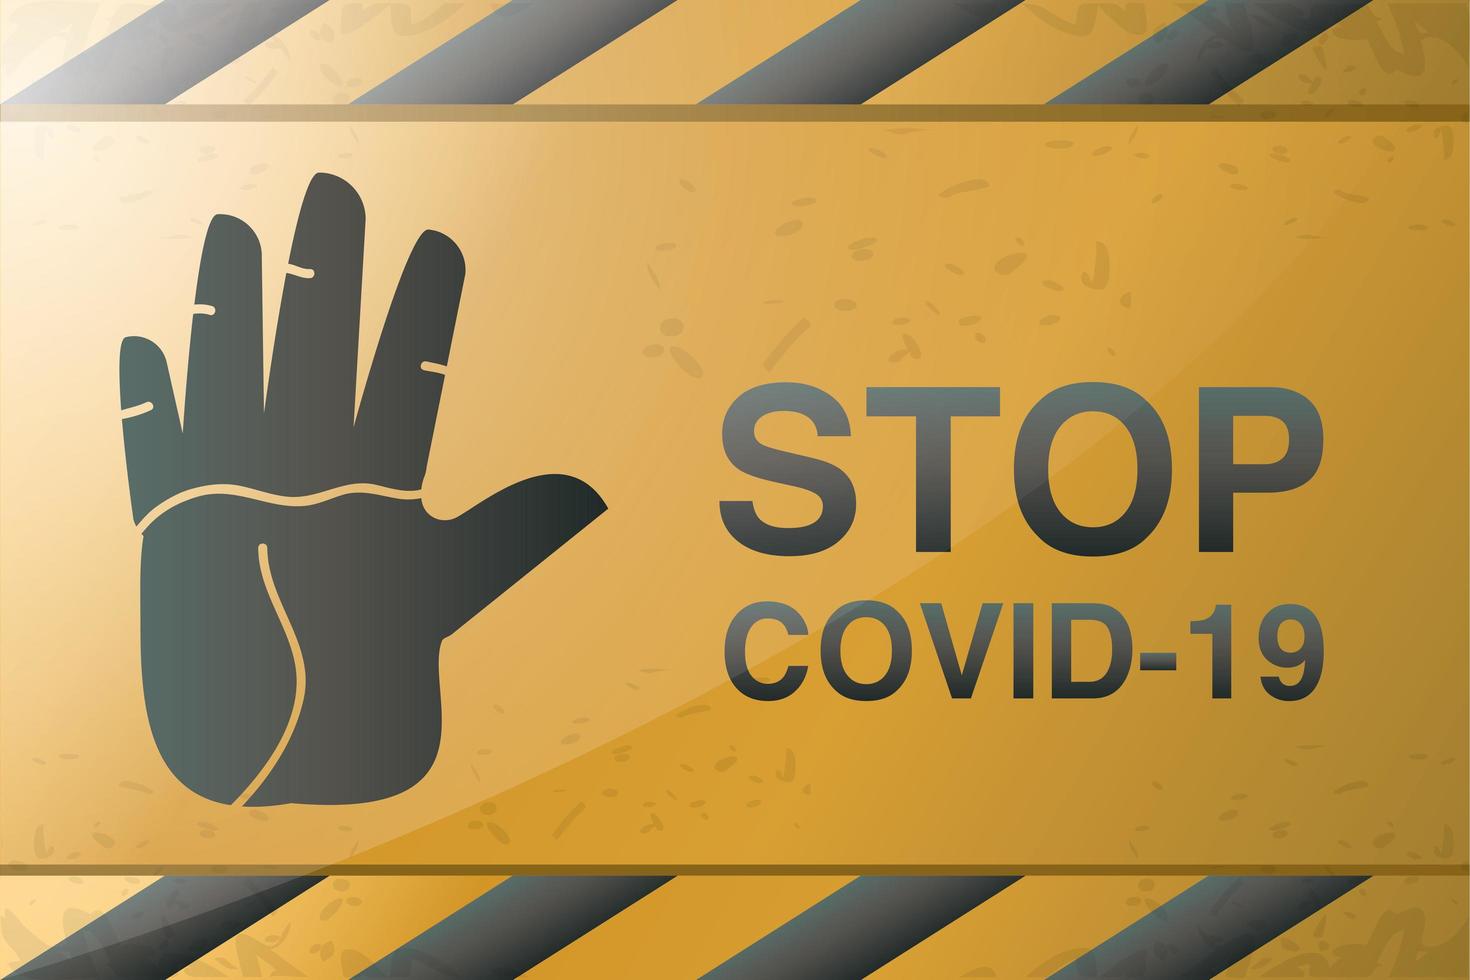 symbole de prudence, arrêtez le covid 19 ou le coronavirus vecteur